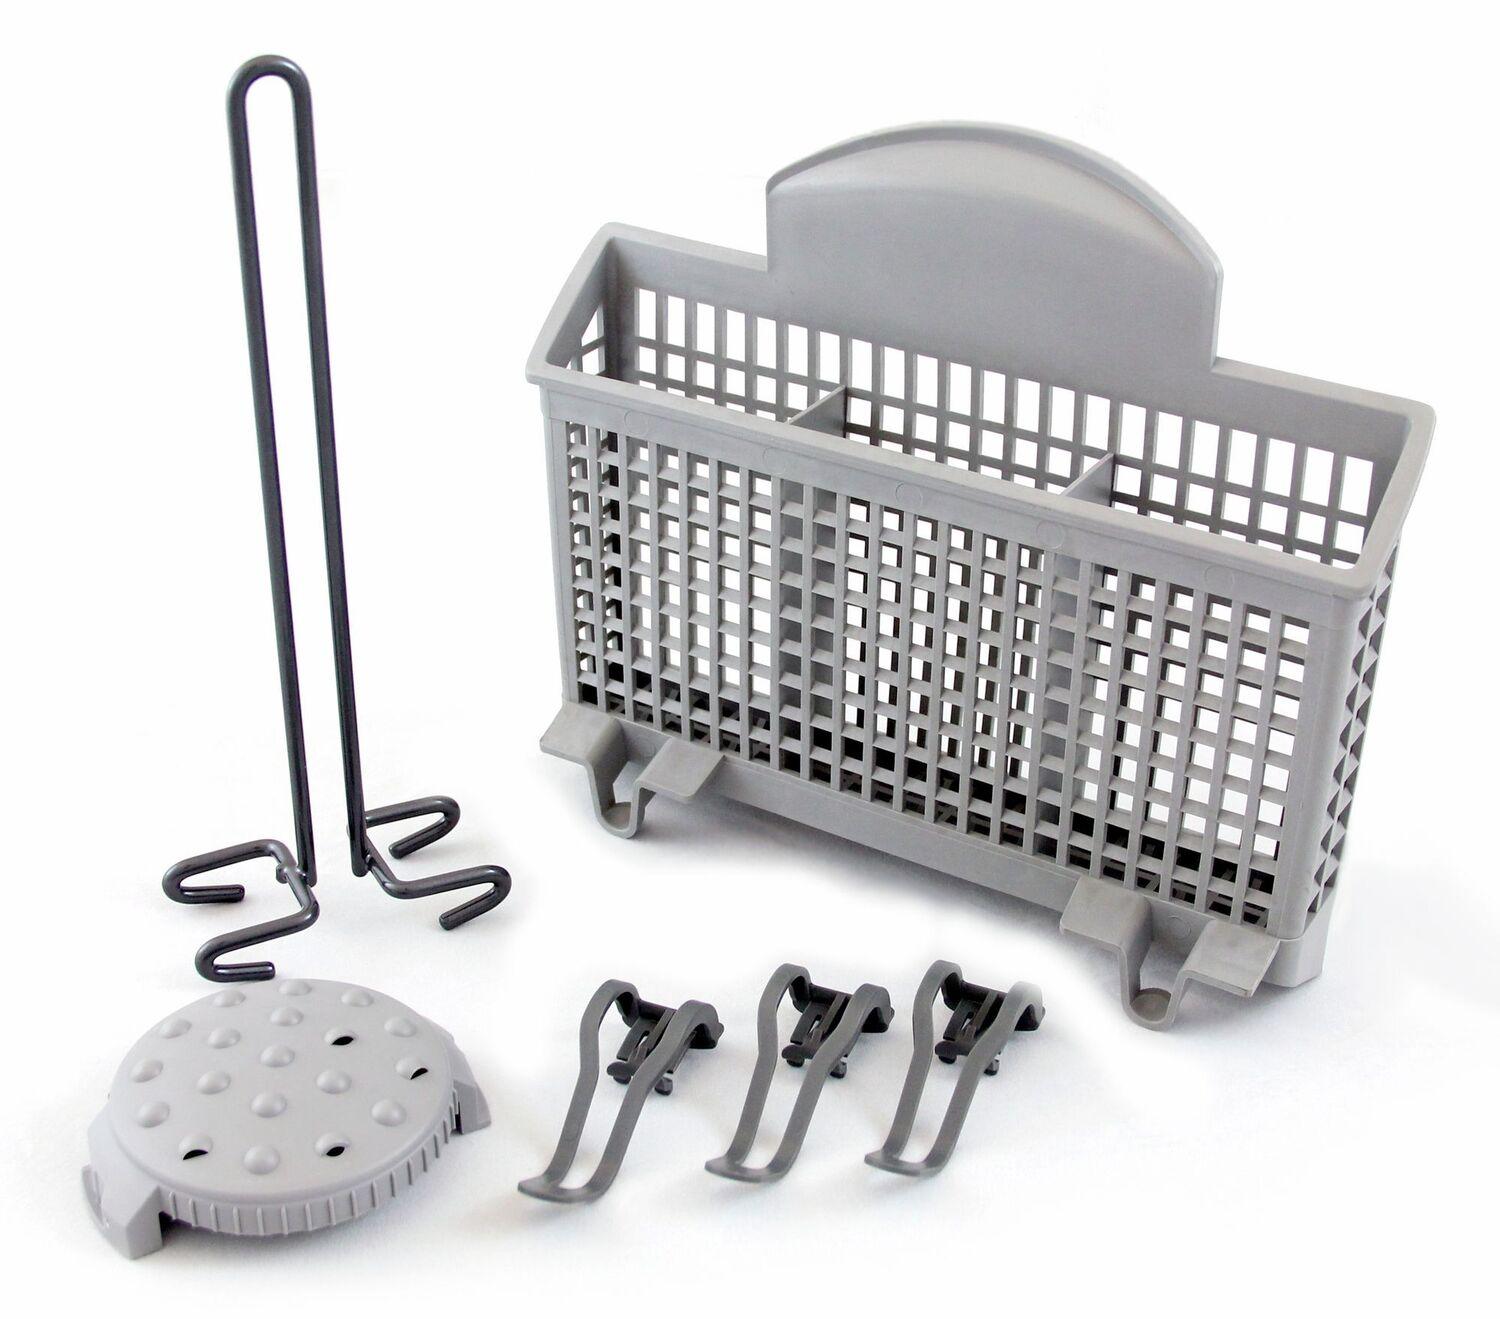 Bosch Dishwasher Accessory Kit with Extra Tall Item Sprinkler, Vase/Bottle Holder, 3 Plastic Item Clips and Small Item Basket - Ascenta